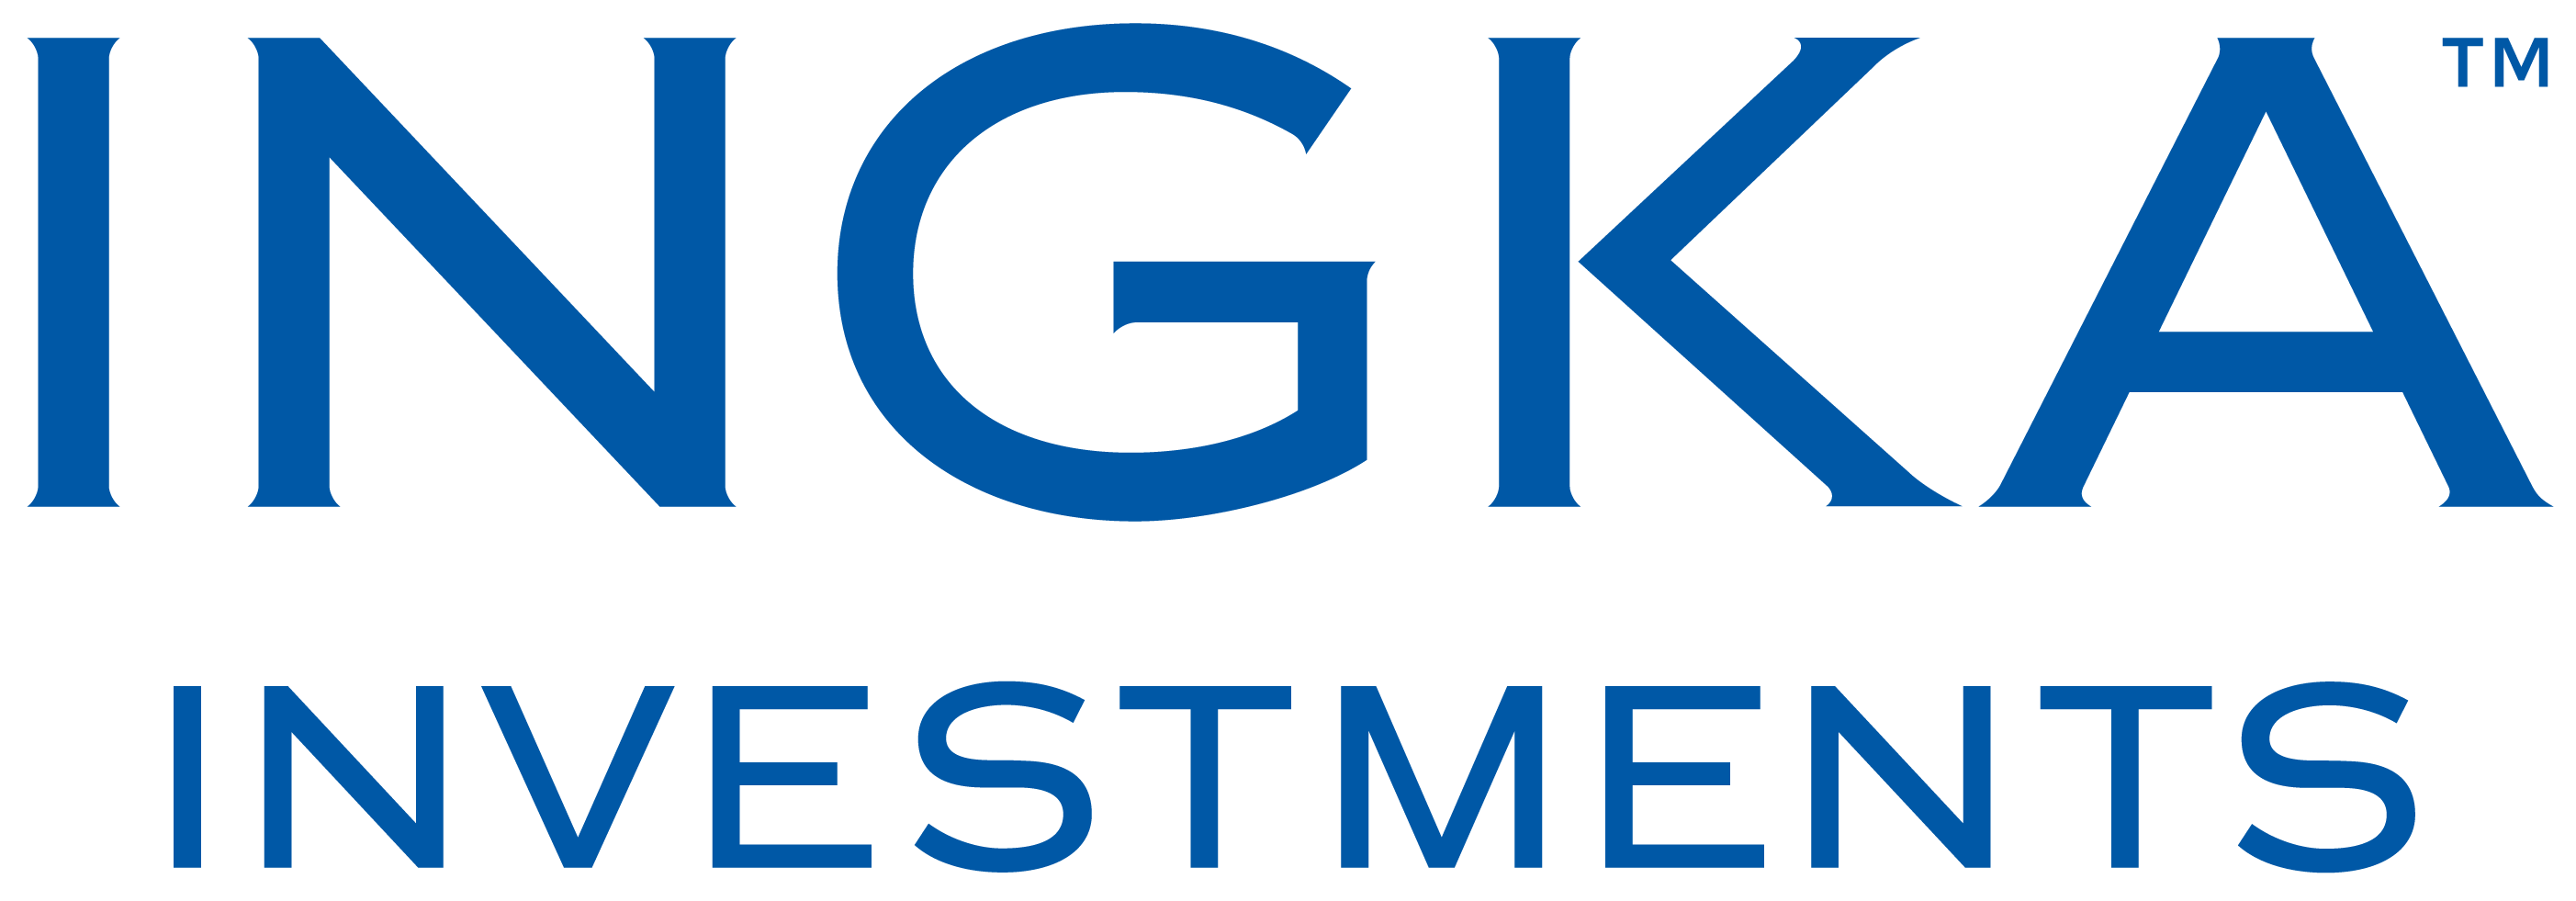 Ingka_investments_wordmark_Blue_PMS